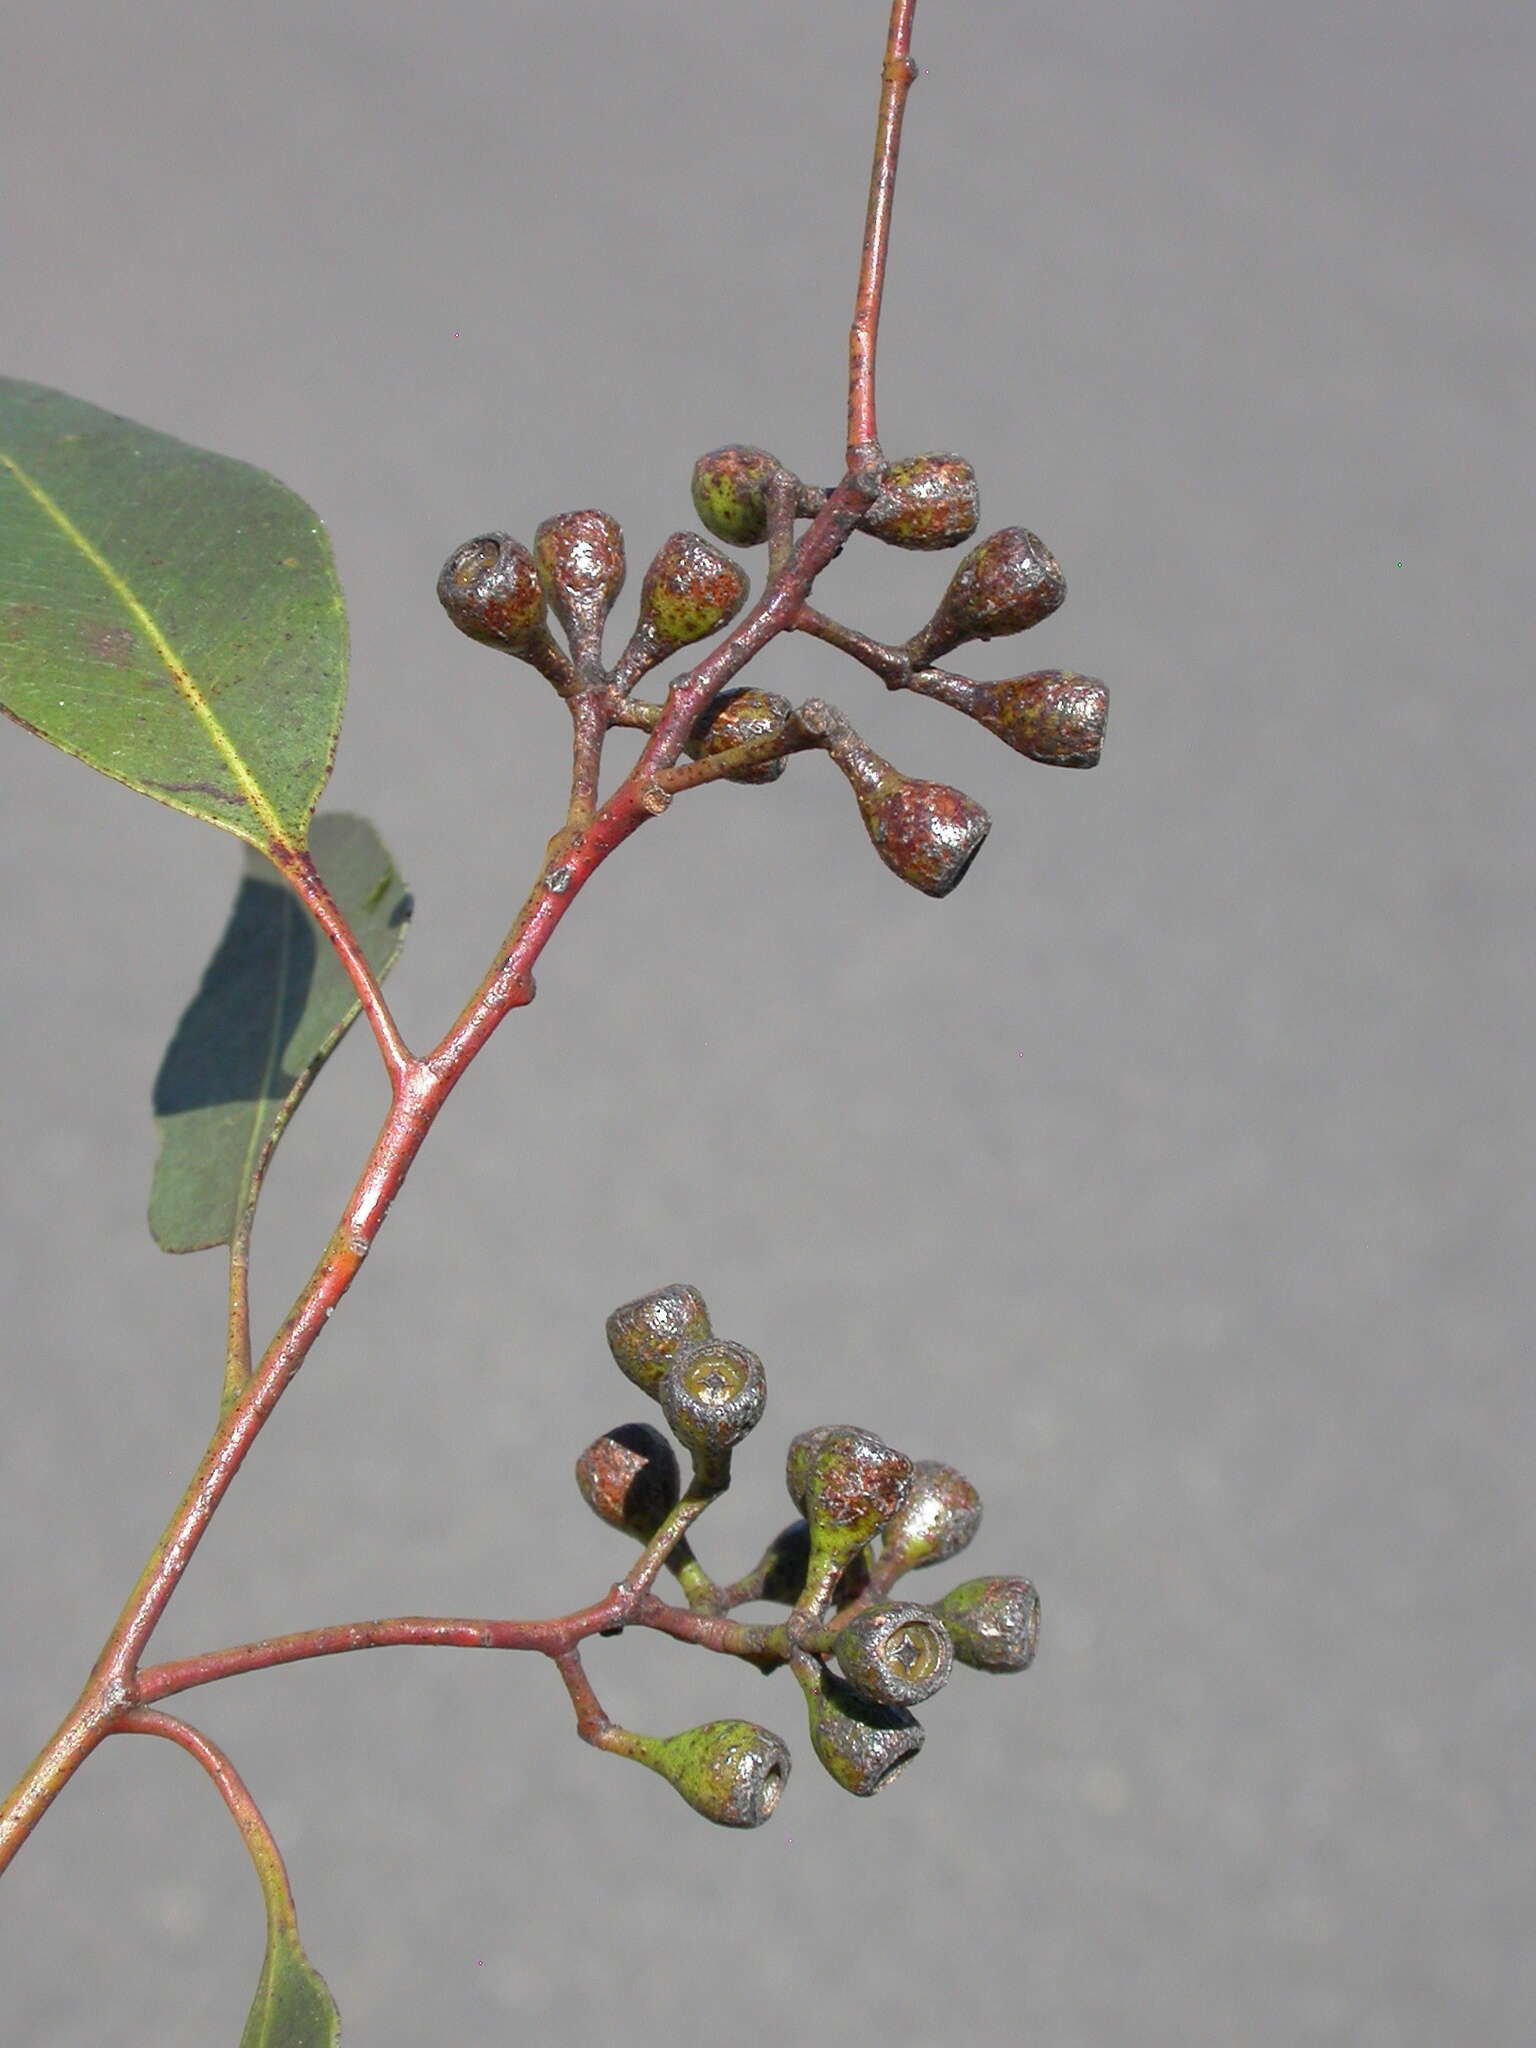 Image of Eucalyptus melanoleuca S. T. Blake